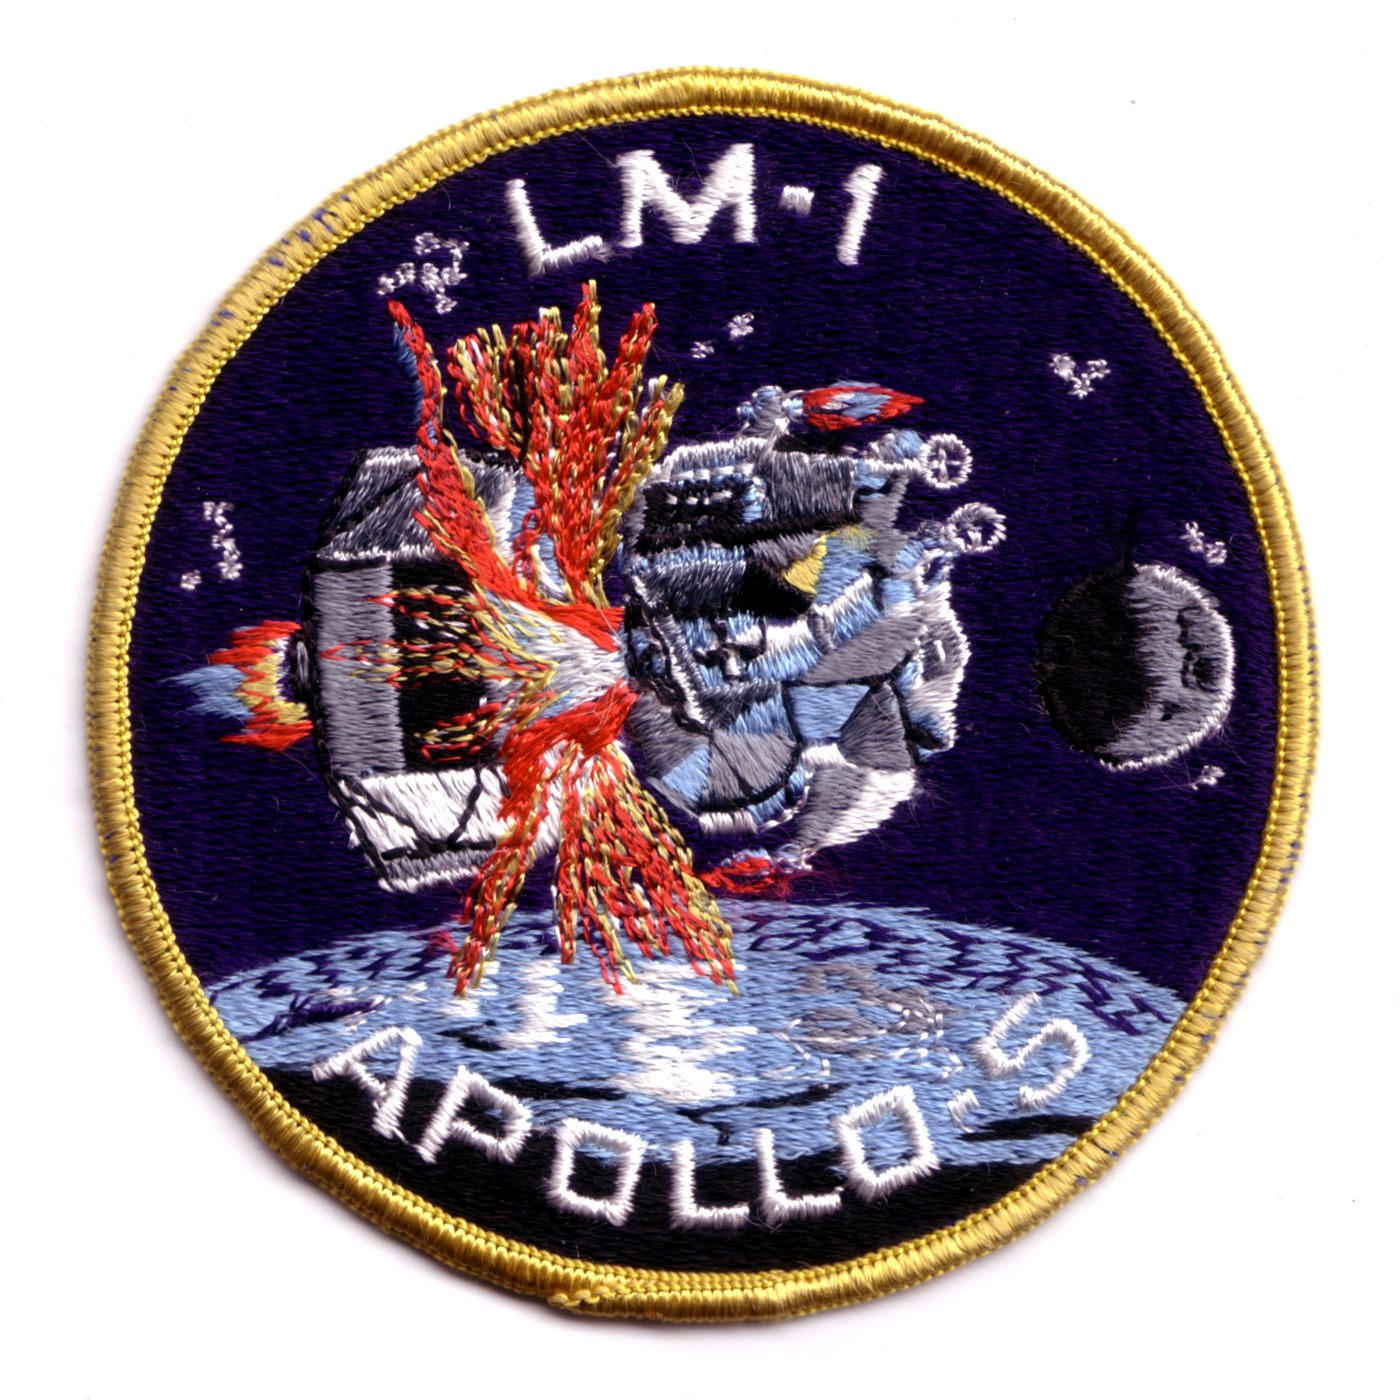 Apollo 5 LM-1 mission patch